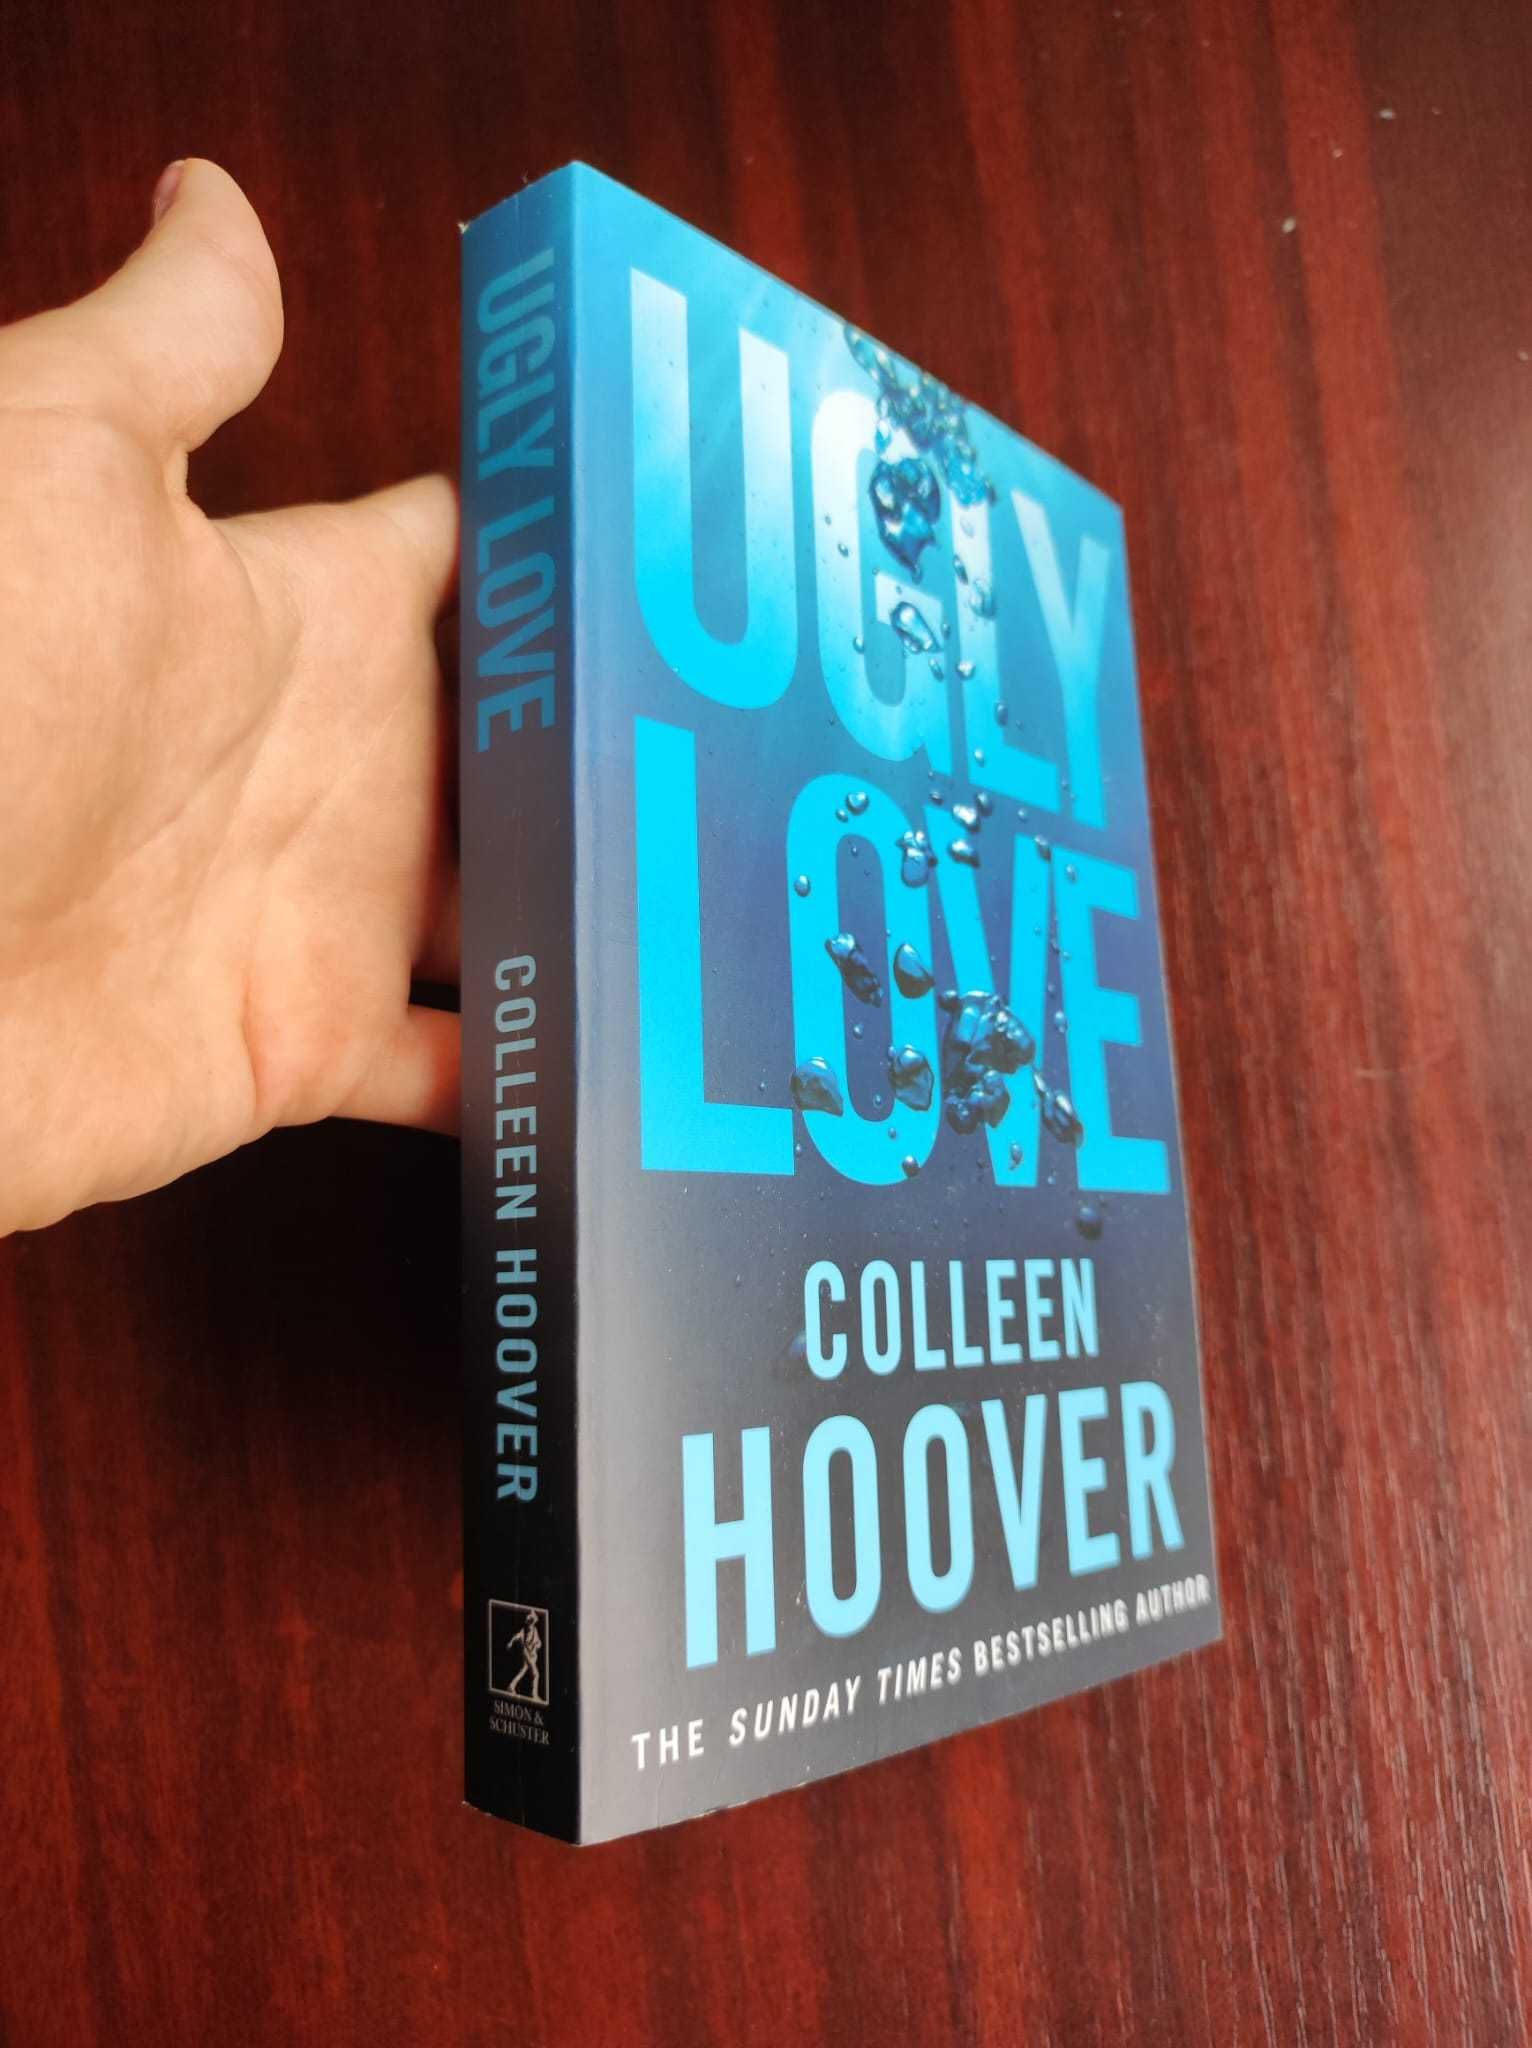 Romanul "Ugly Love" de Colleen Hoover